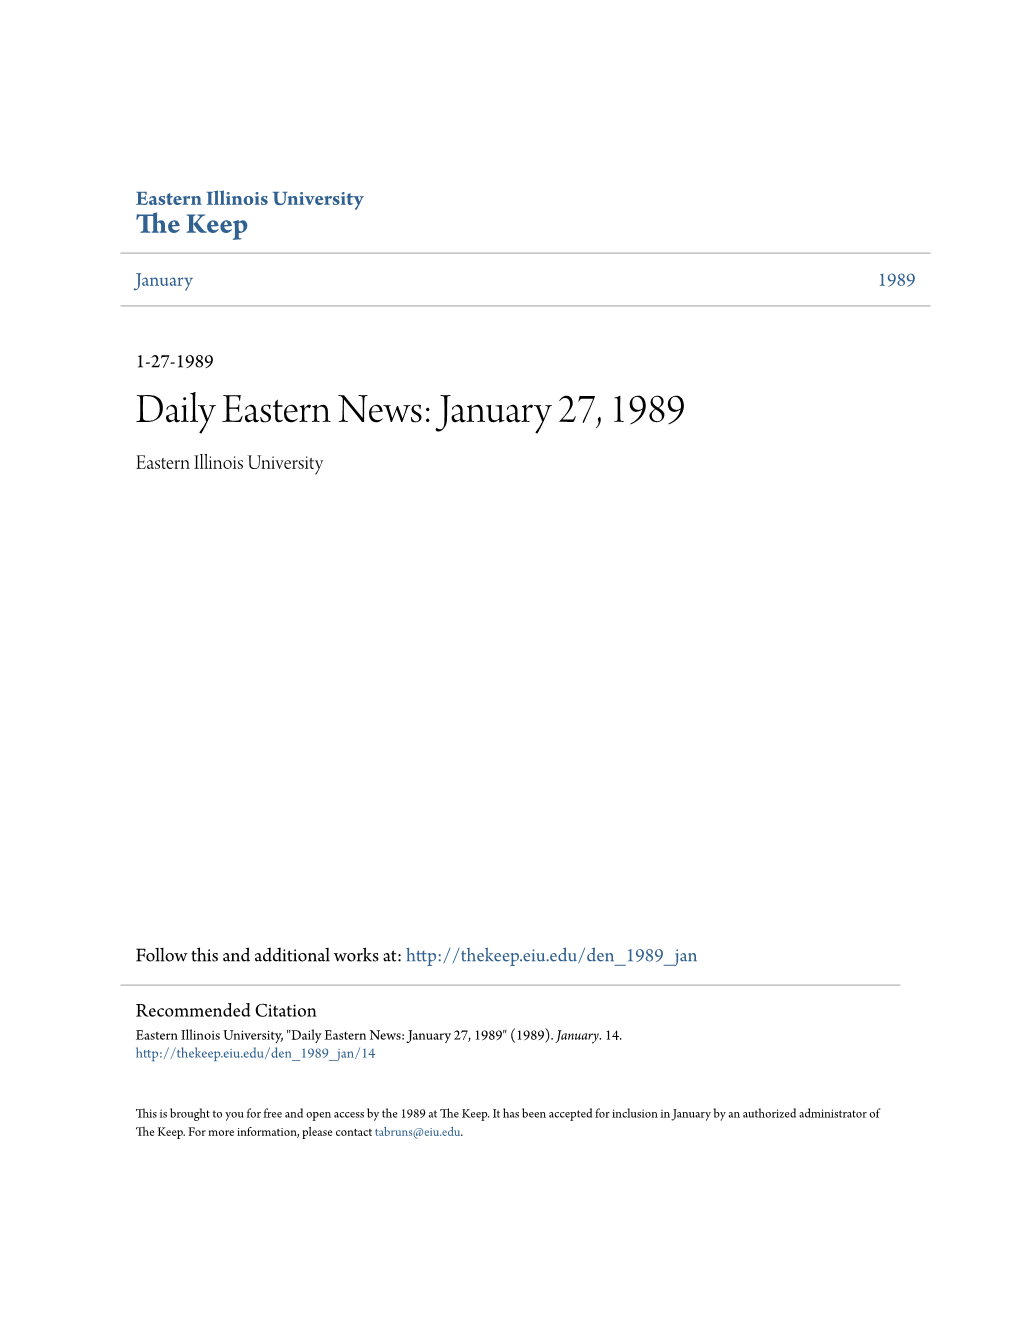 Daily Eastern News: January 27, 1989 Eastern Illinois University